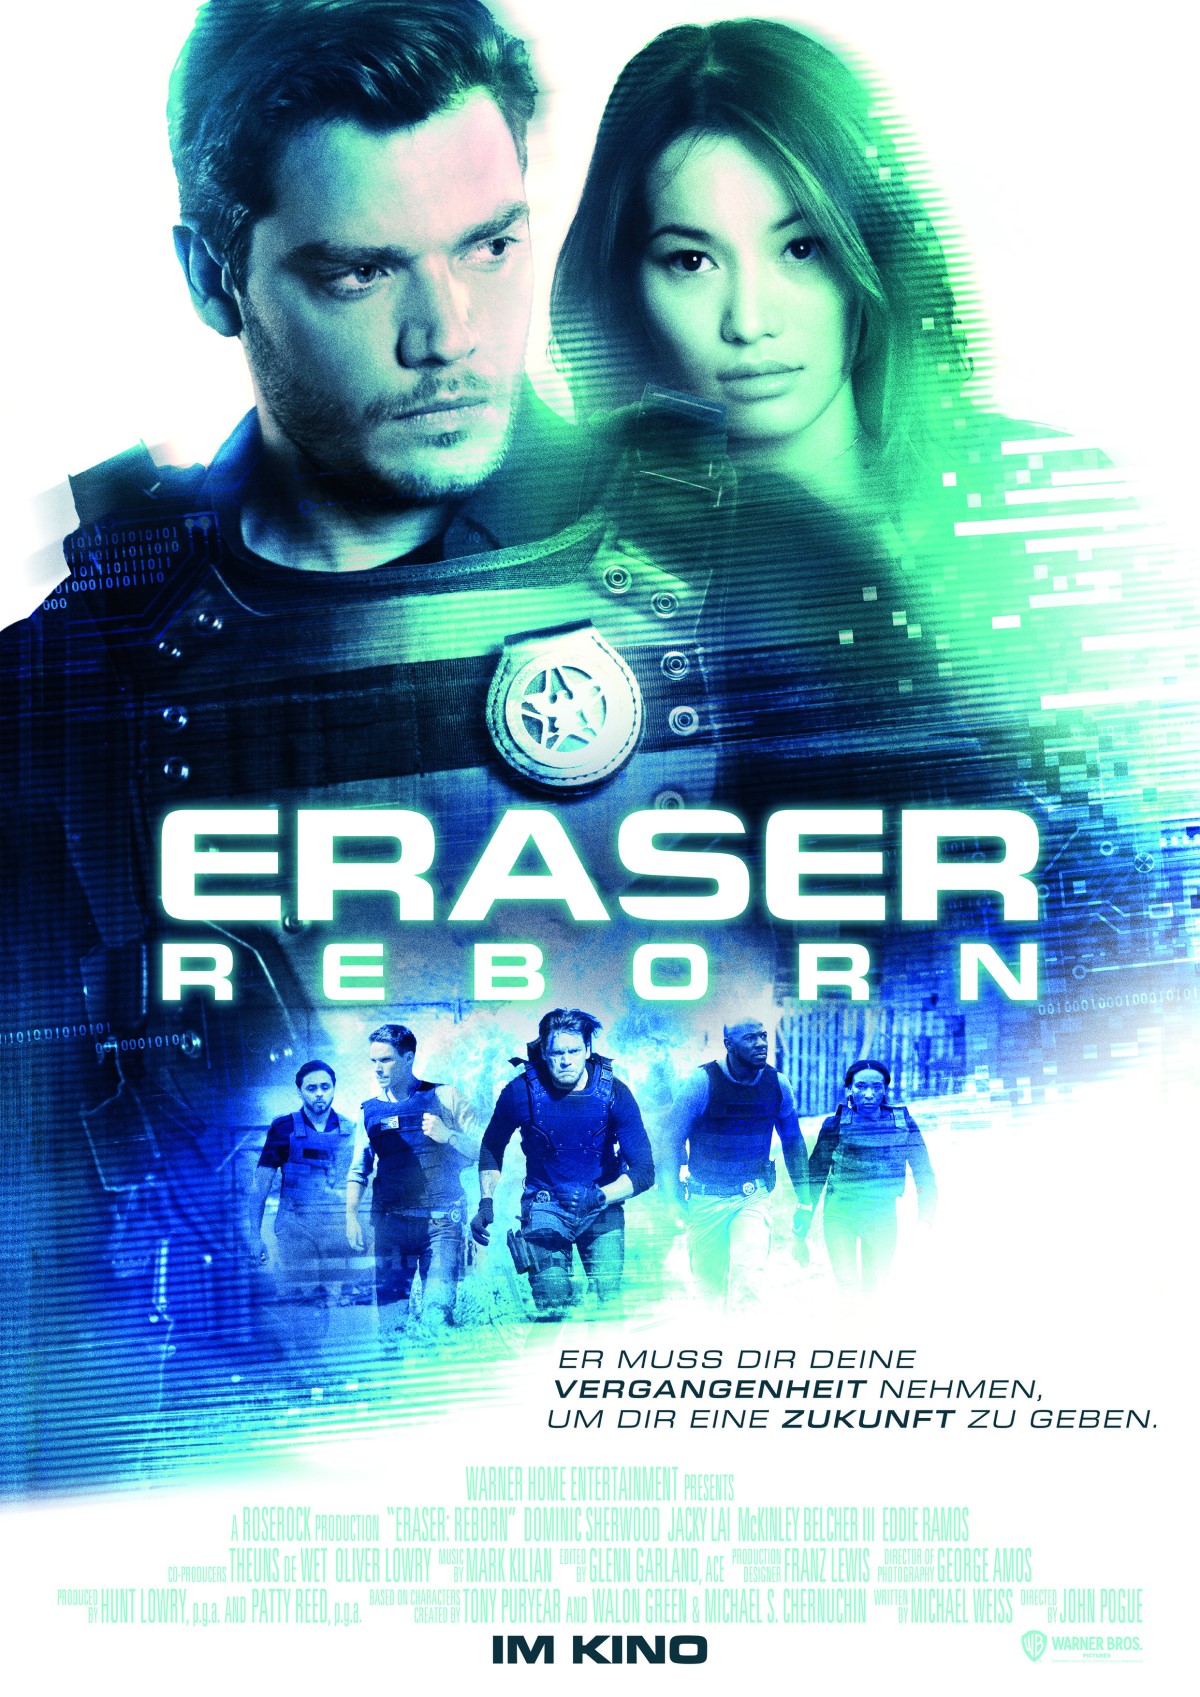 Eraser Reborn Trailer & Poster